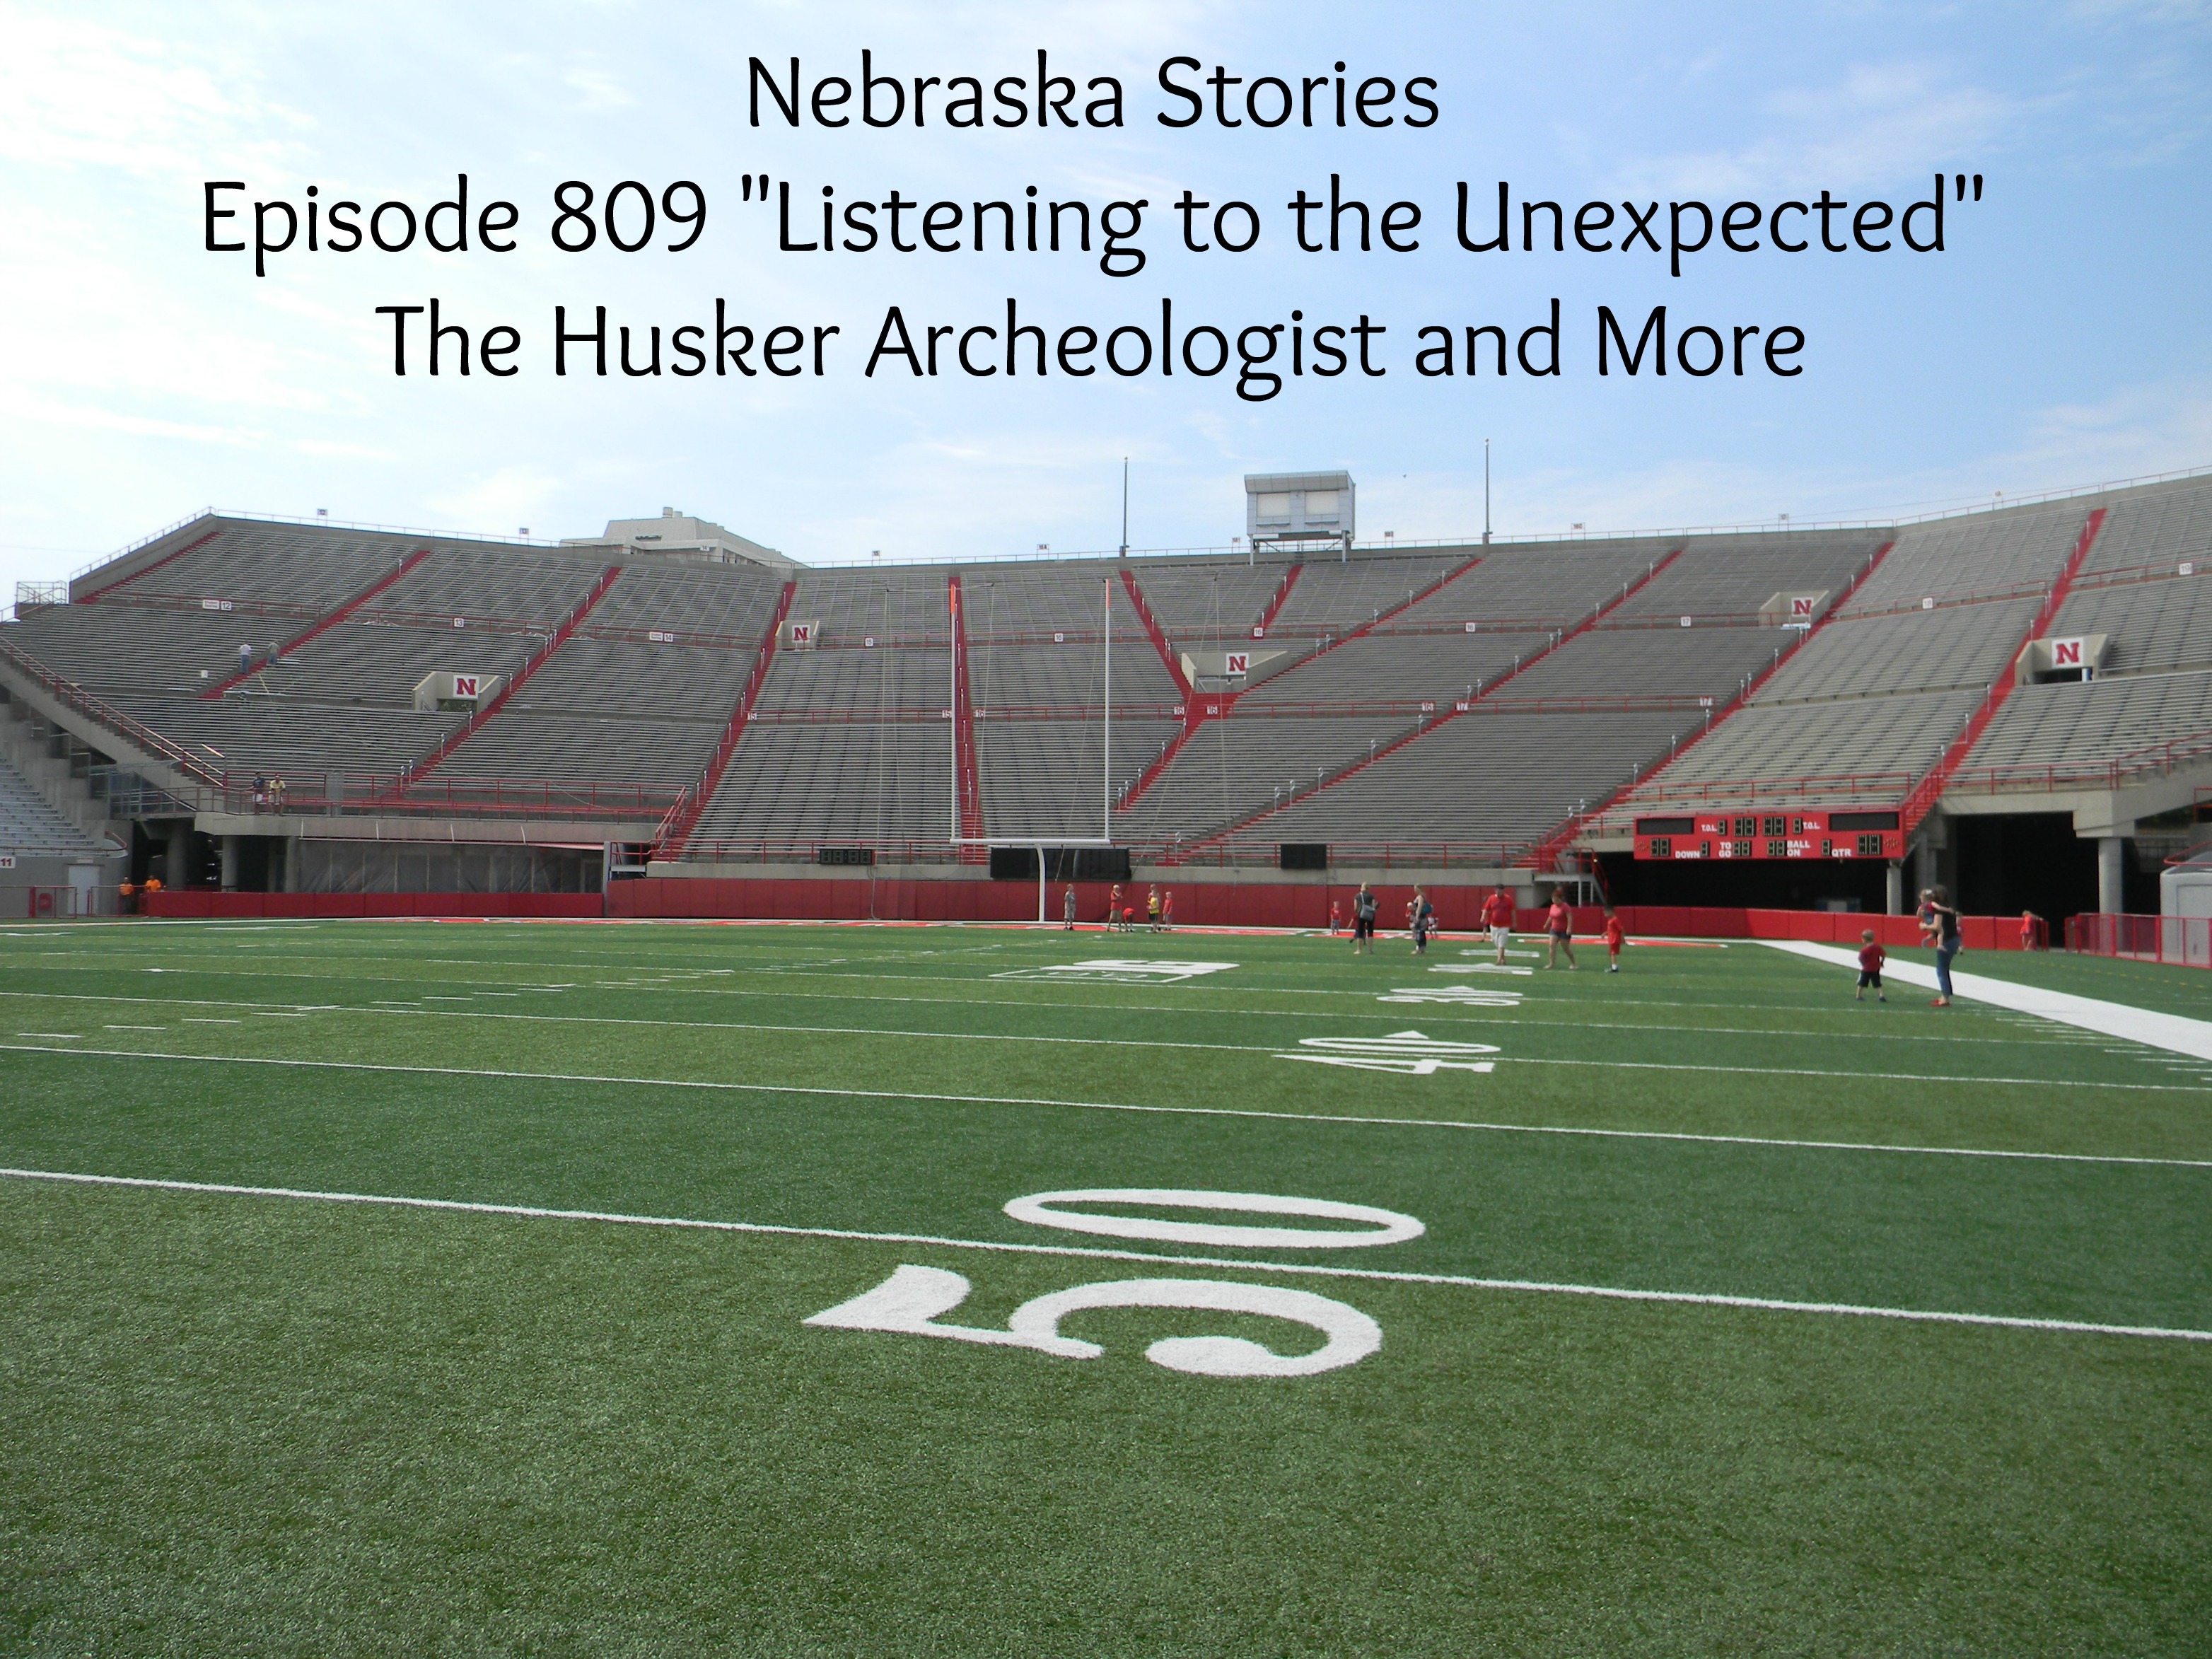 Listen to the Unexpected Nebraska Stories Episode 809